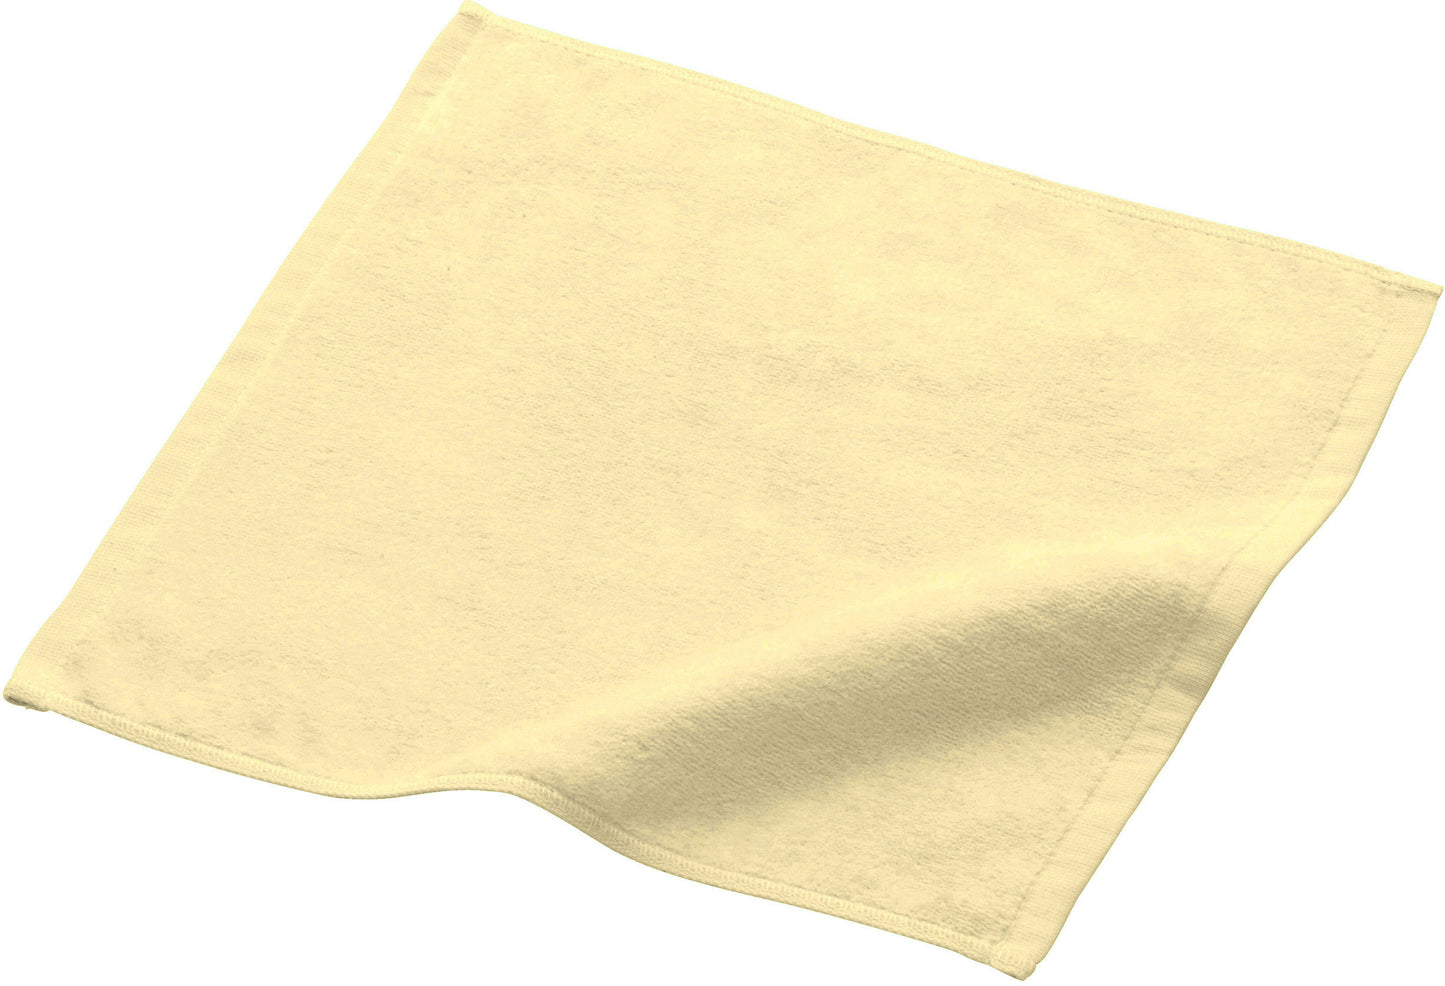 [Plus-1] 519-HT hand towel with sewn hem